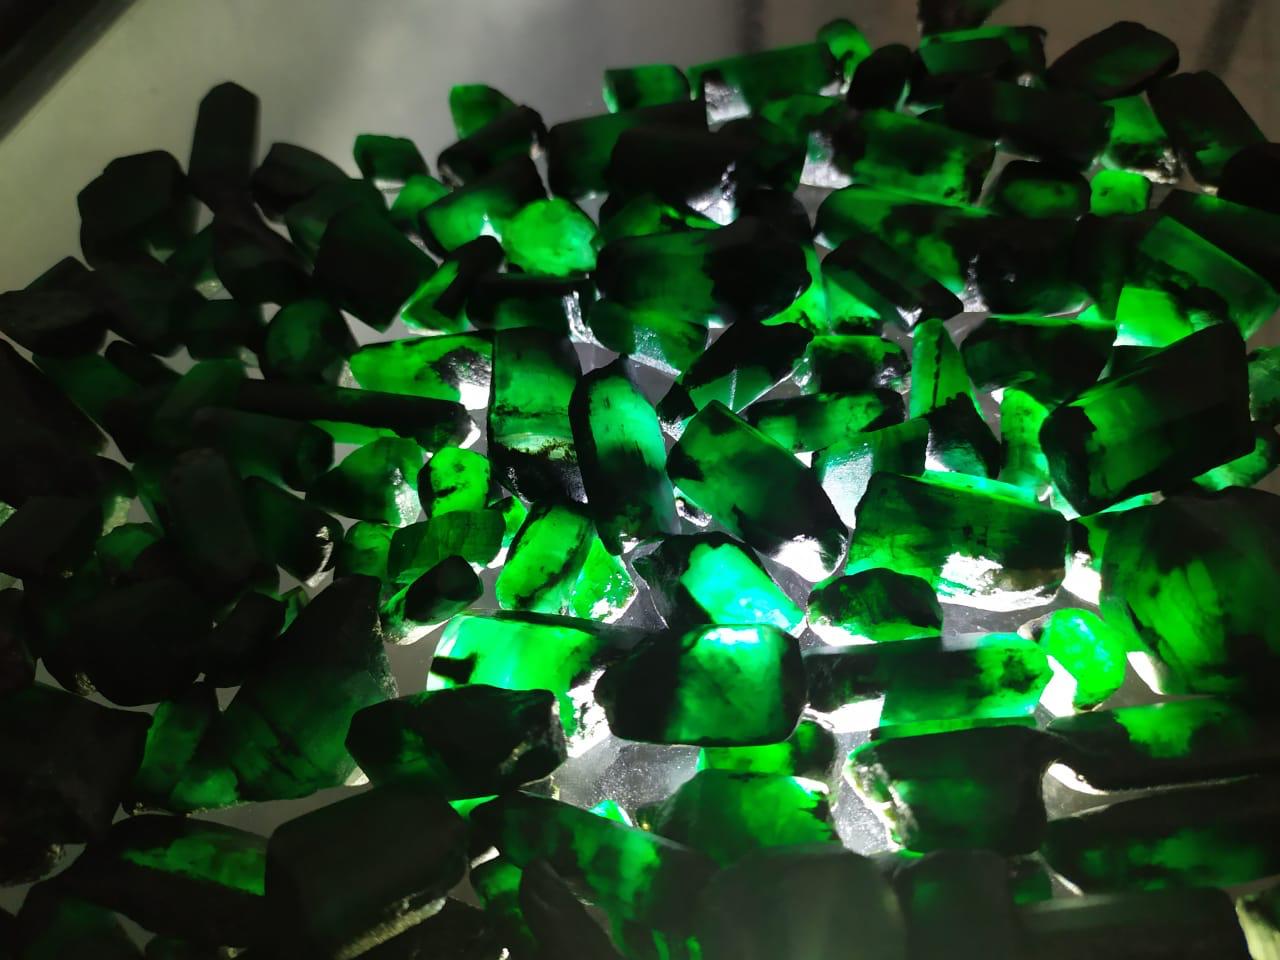 Emerald 05